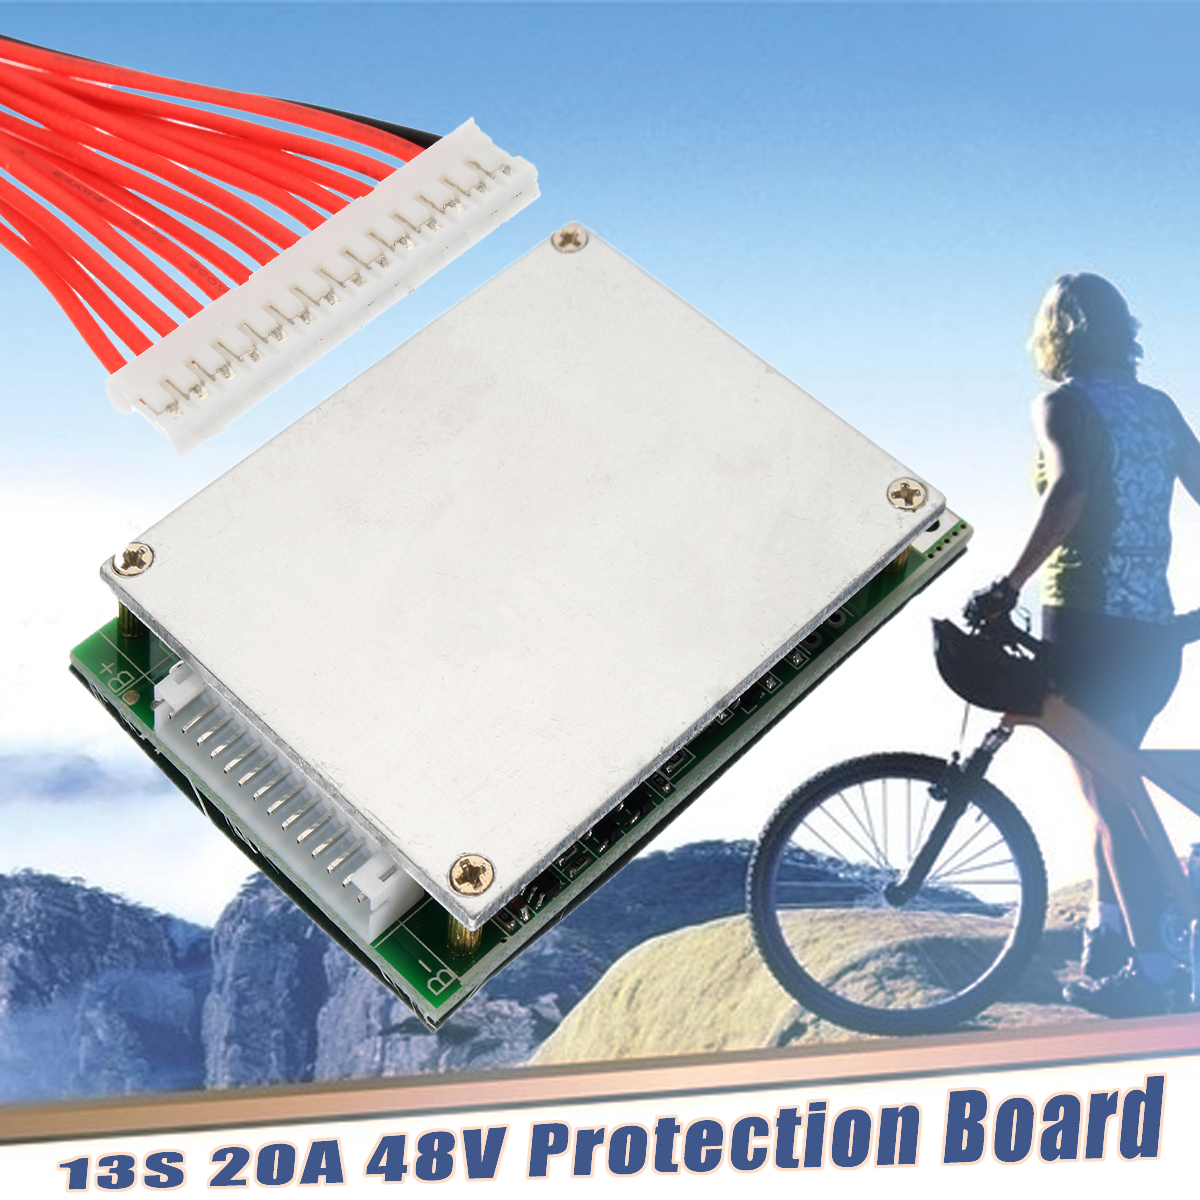 48V Battery Protection Board